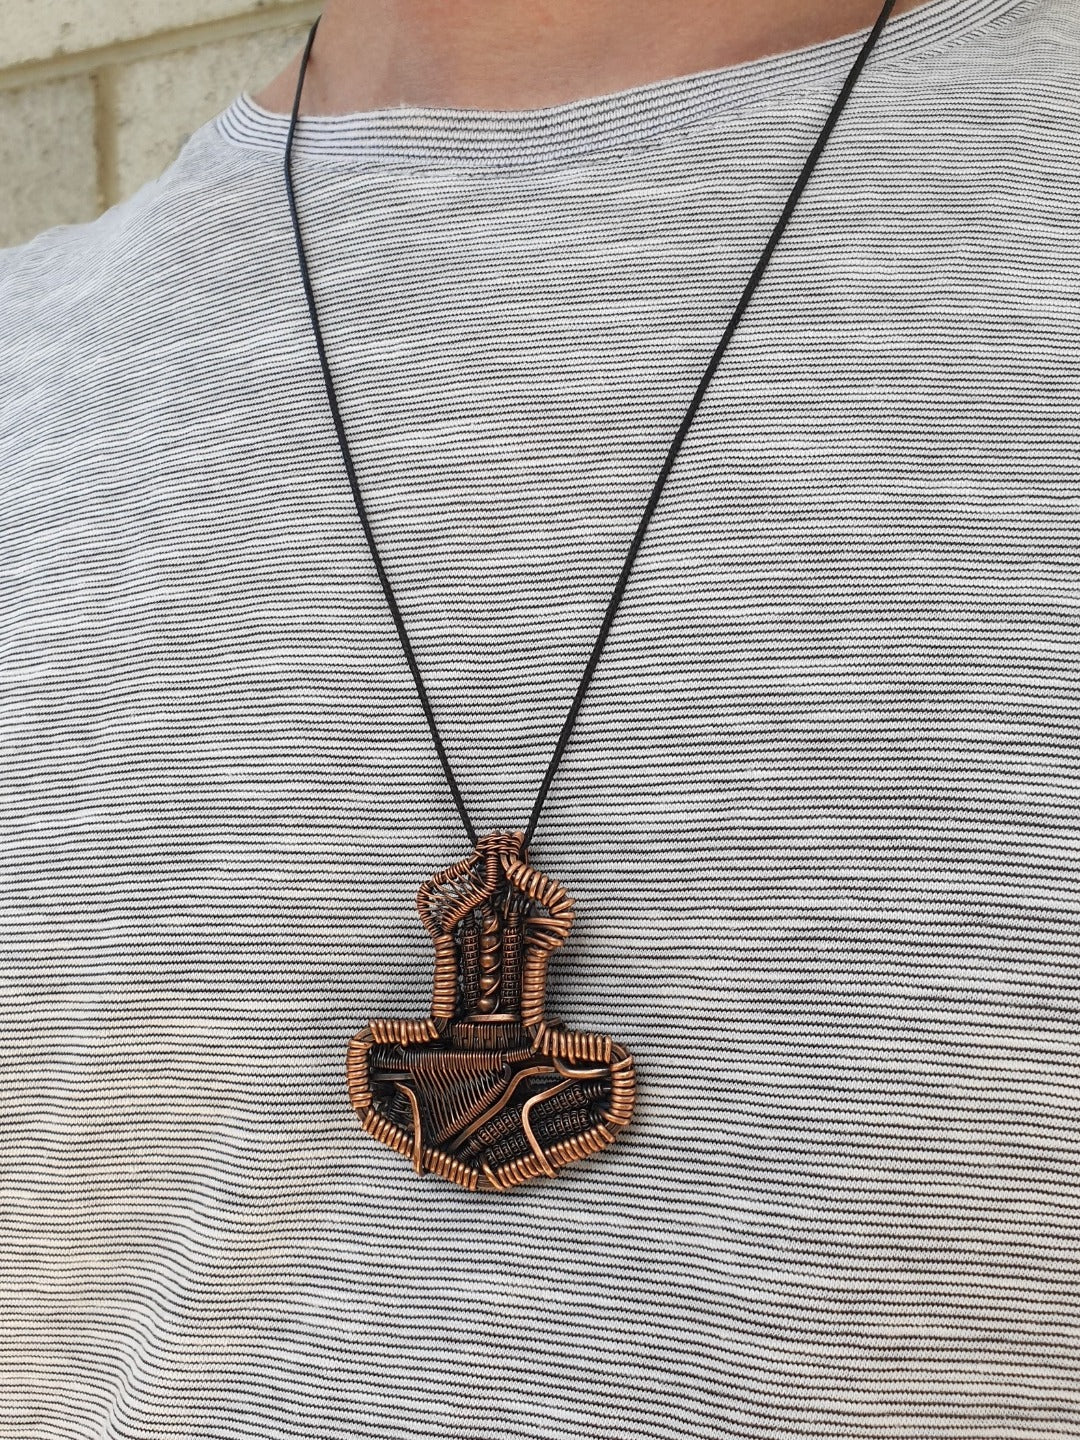 Mjölnir Copper Wire Wrapped Necklace